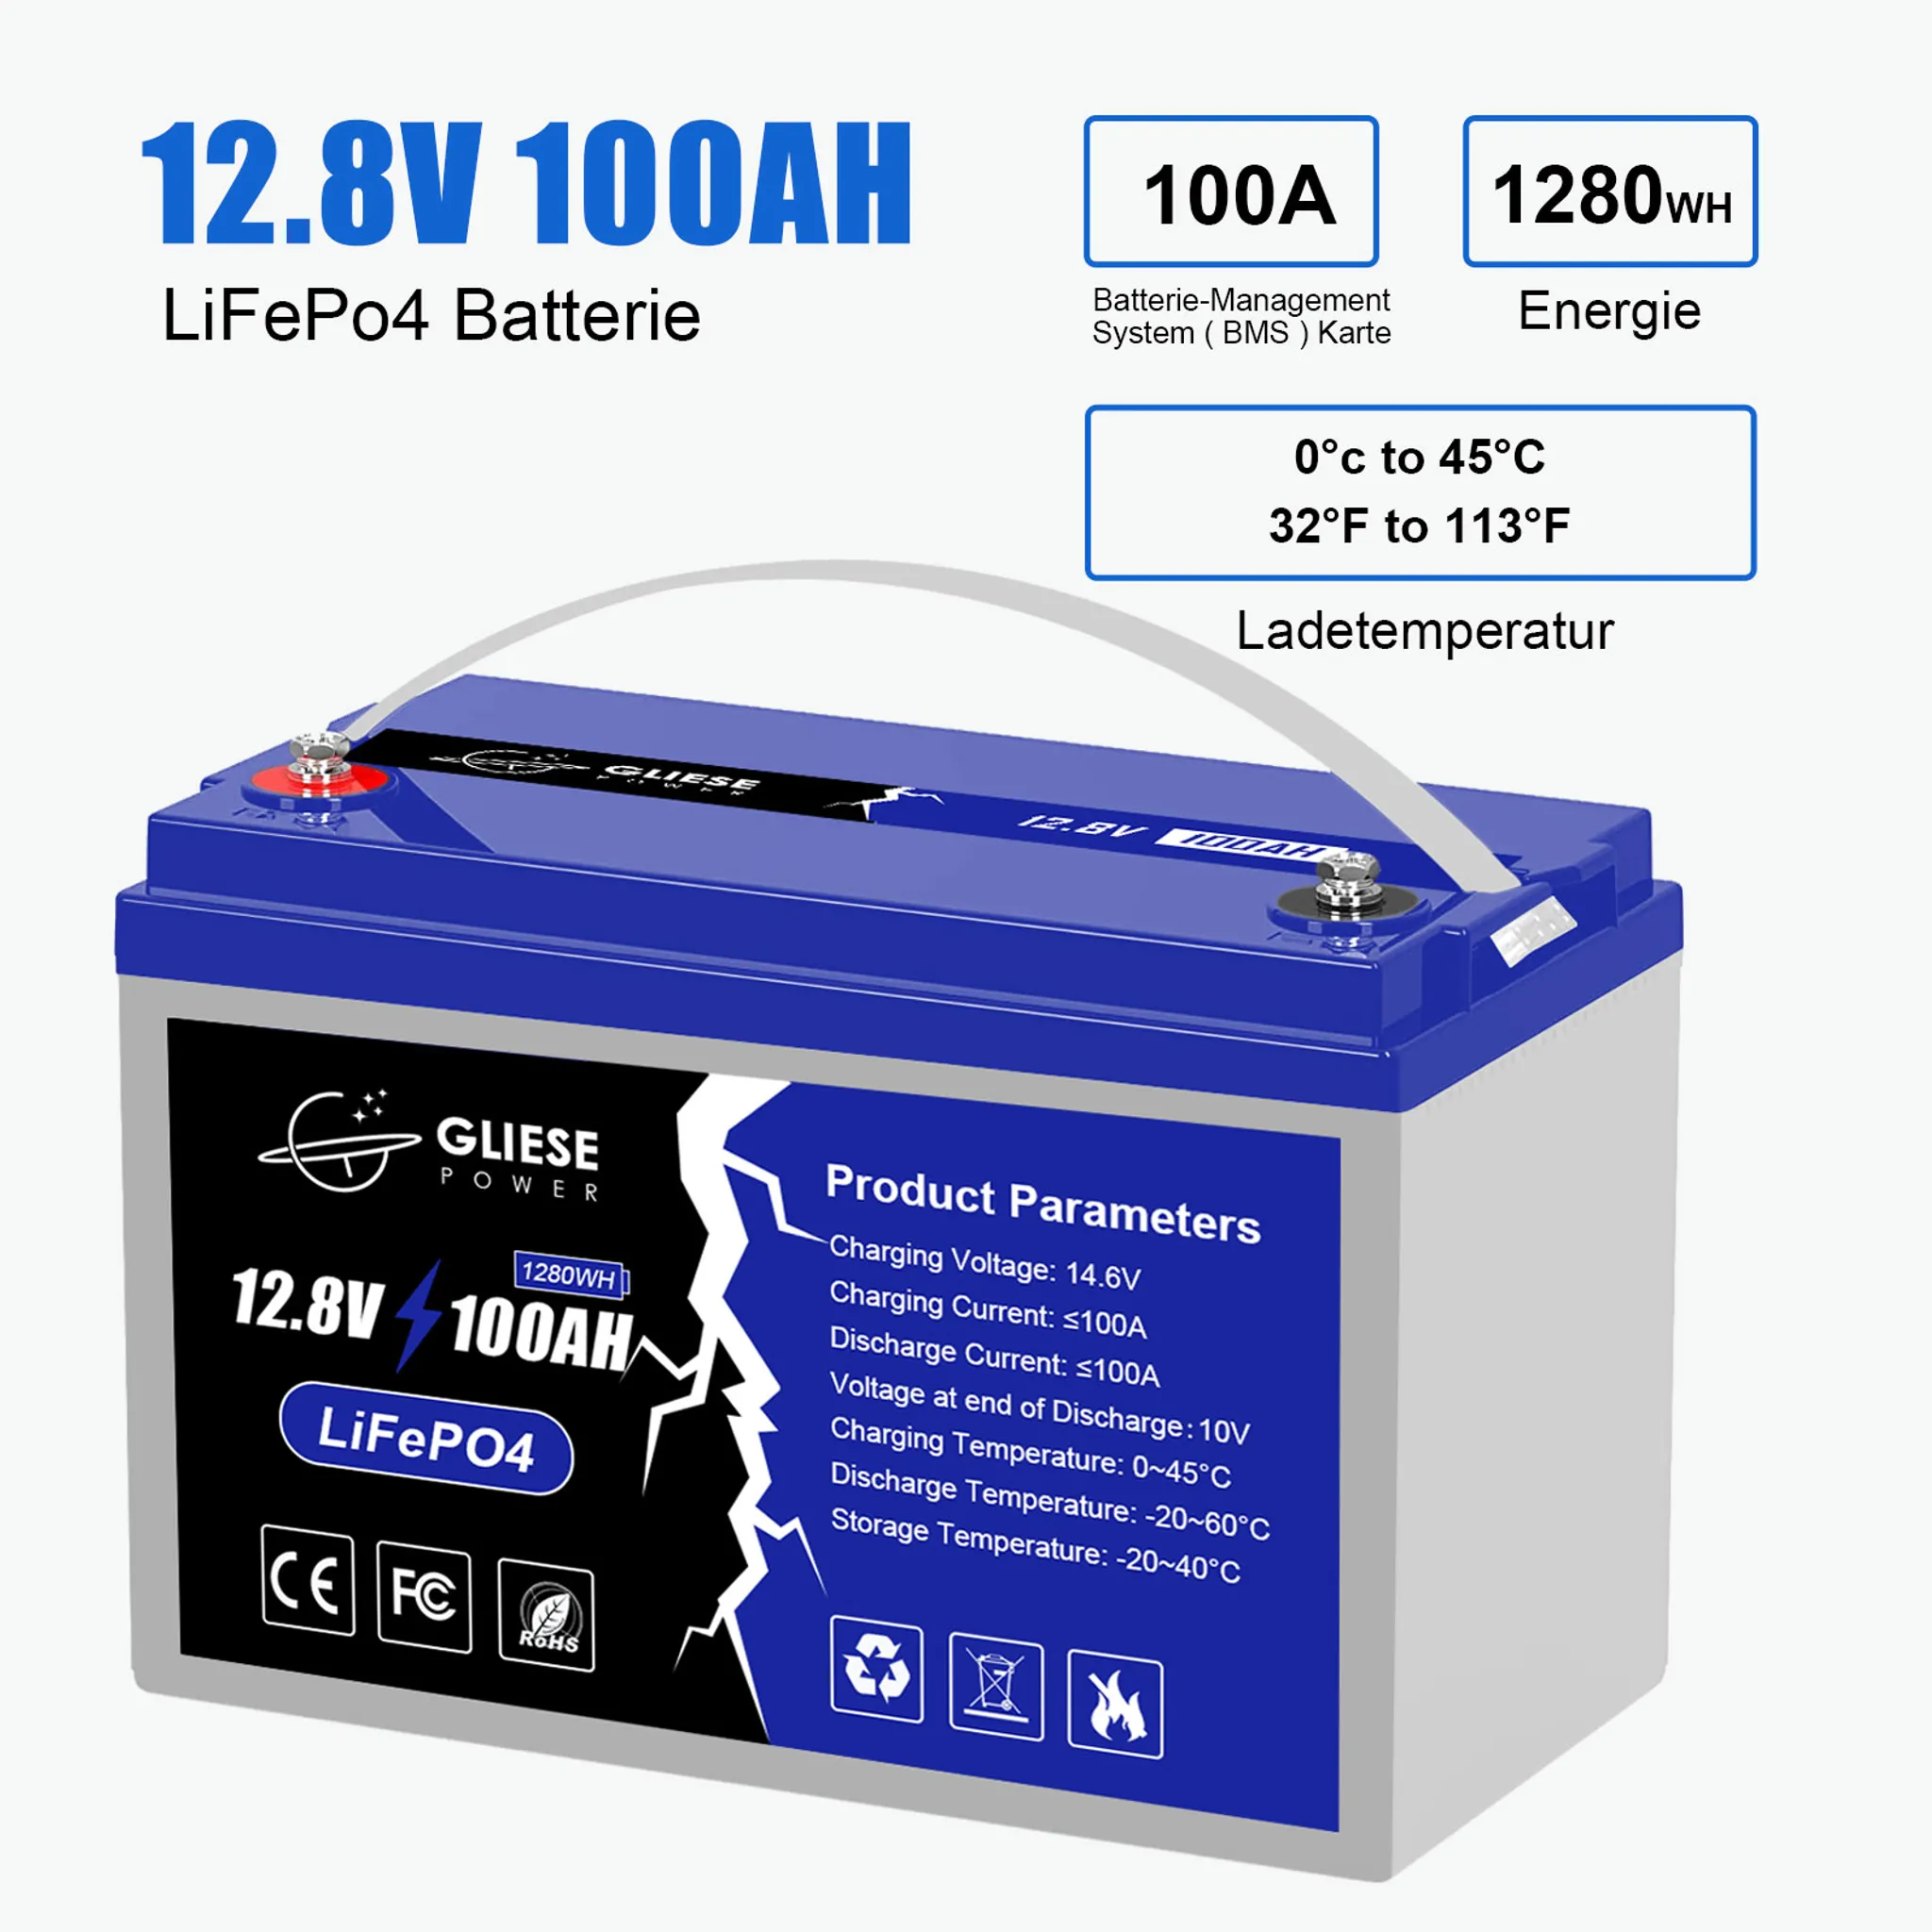 Langzeit LiFePO4 100Ah 12V Lithium Batterie, 199,00 €